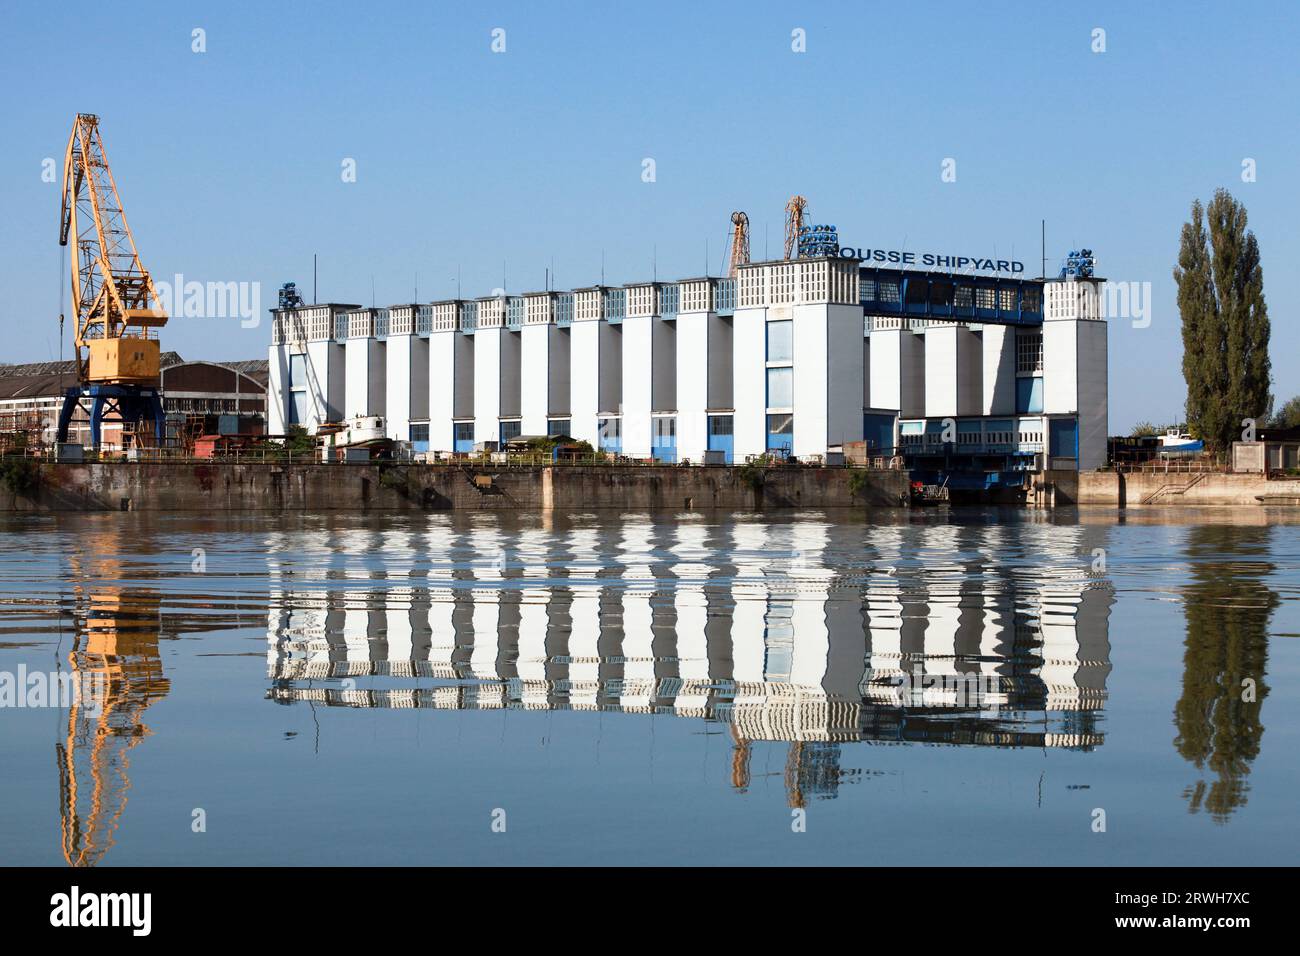 Ruse, Bulgarien - 29. September 2014: Reparatur des Trockendocks der Rousse Shipyard Company an der Donauküste Stockfoto